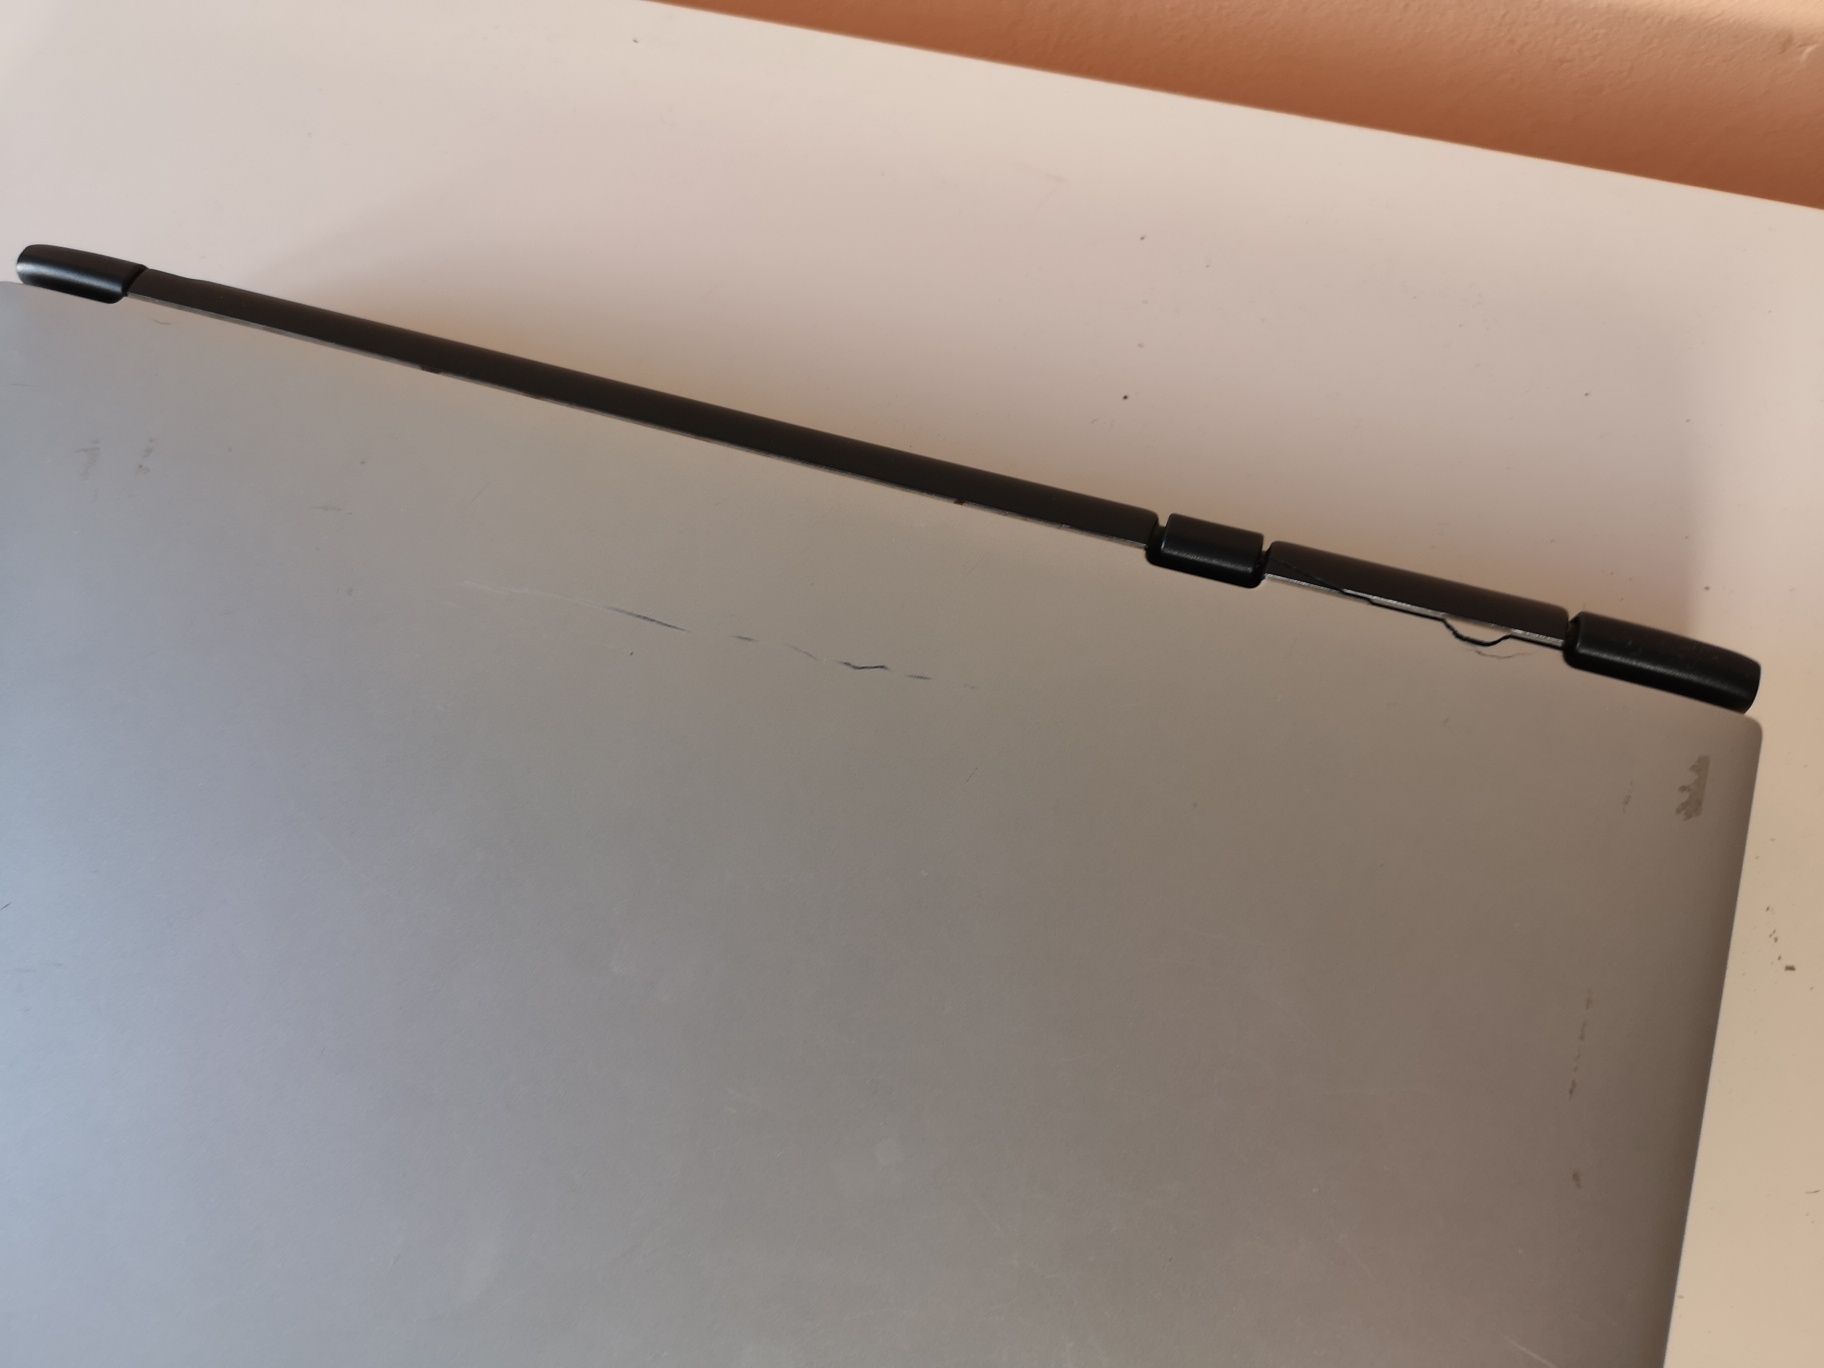 Лаптоп Acer Aspire 1690 за части